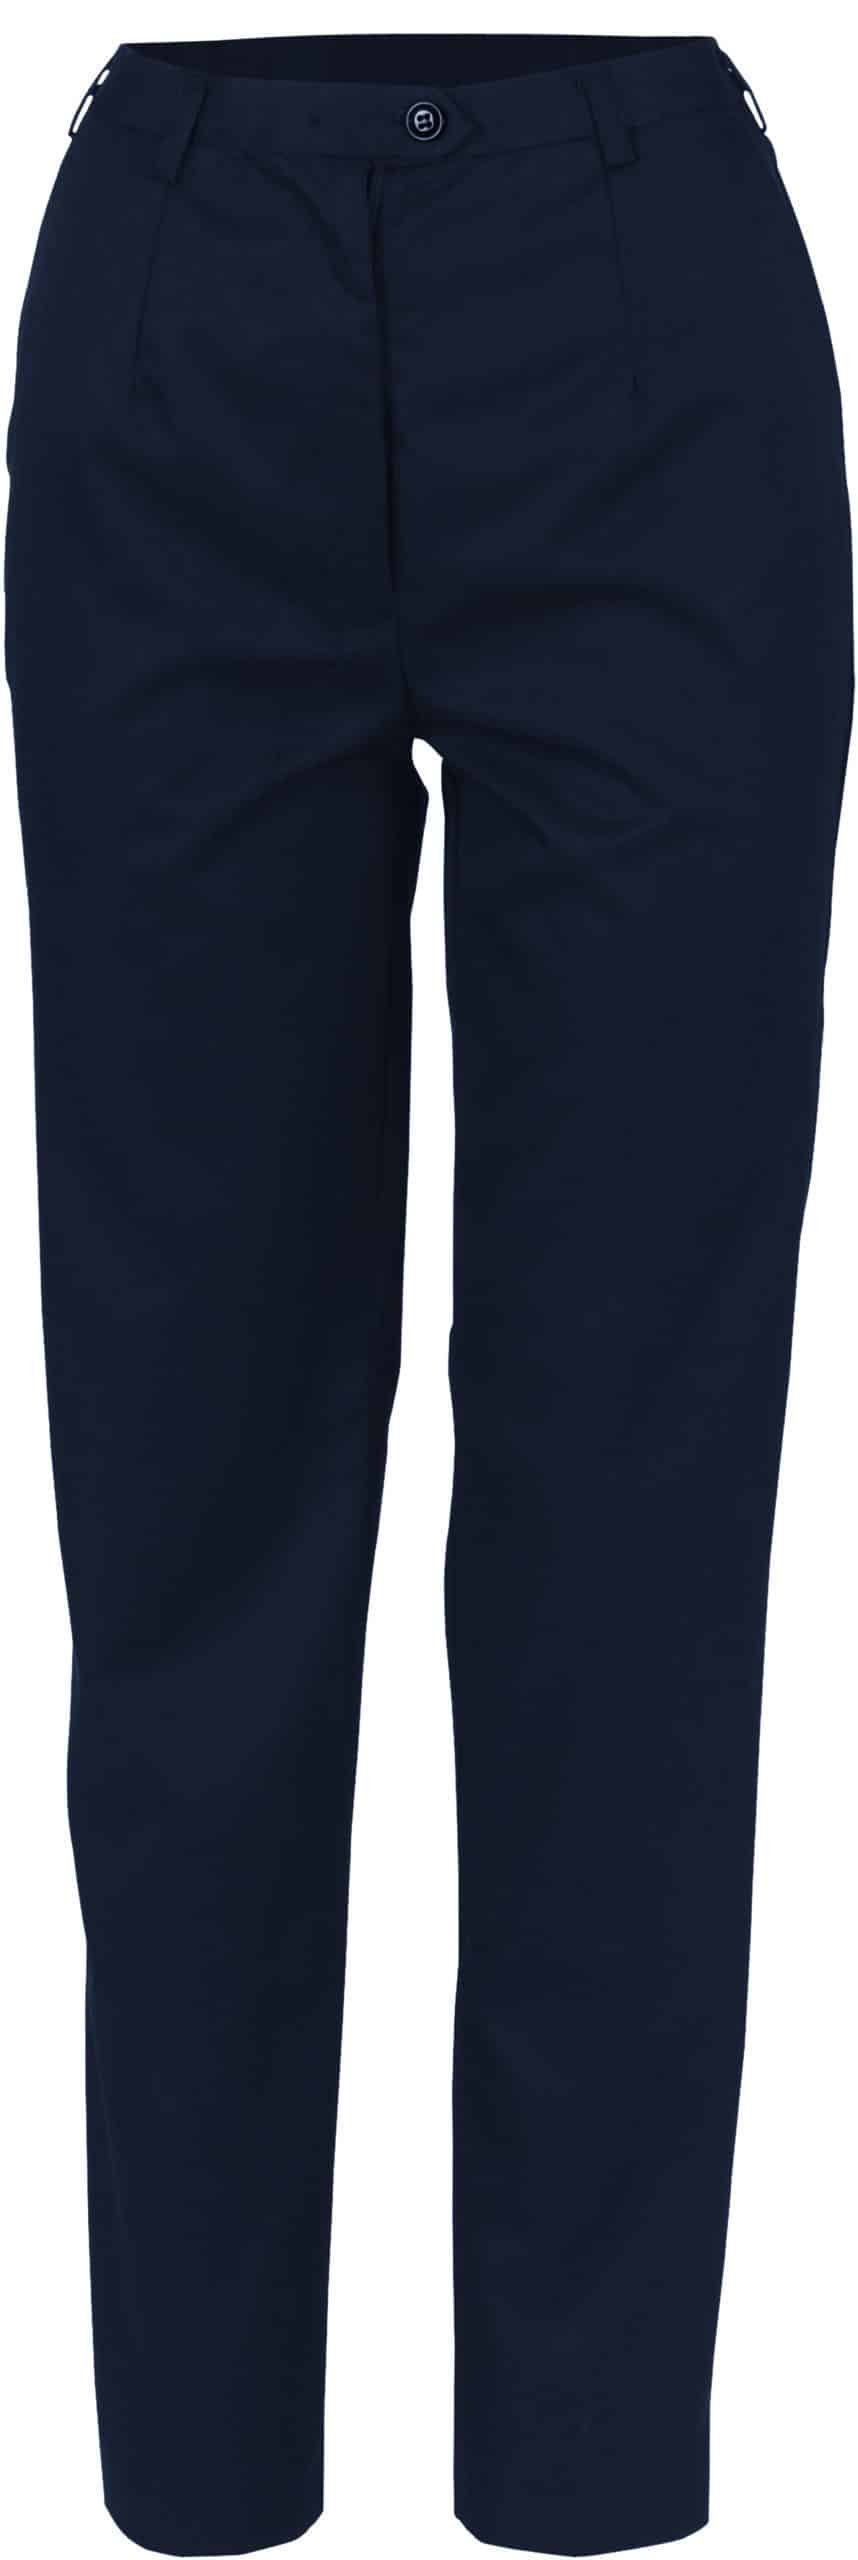 DNC Workwear Ladies P/V Flat Front Pants